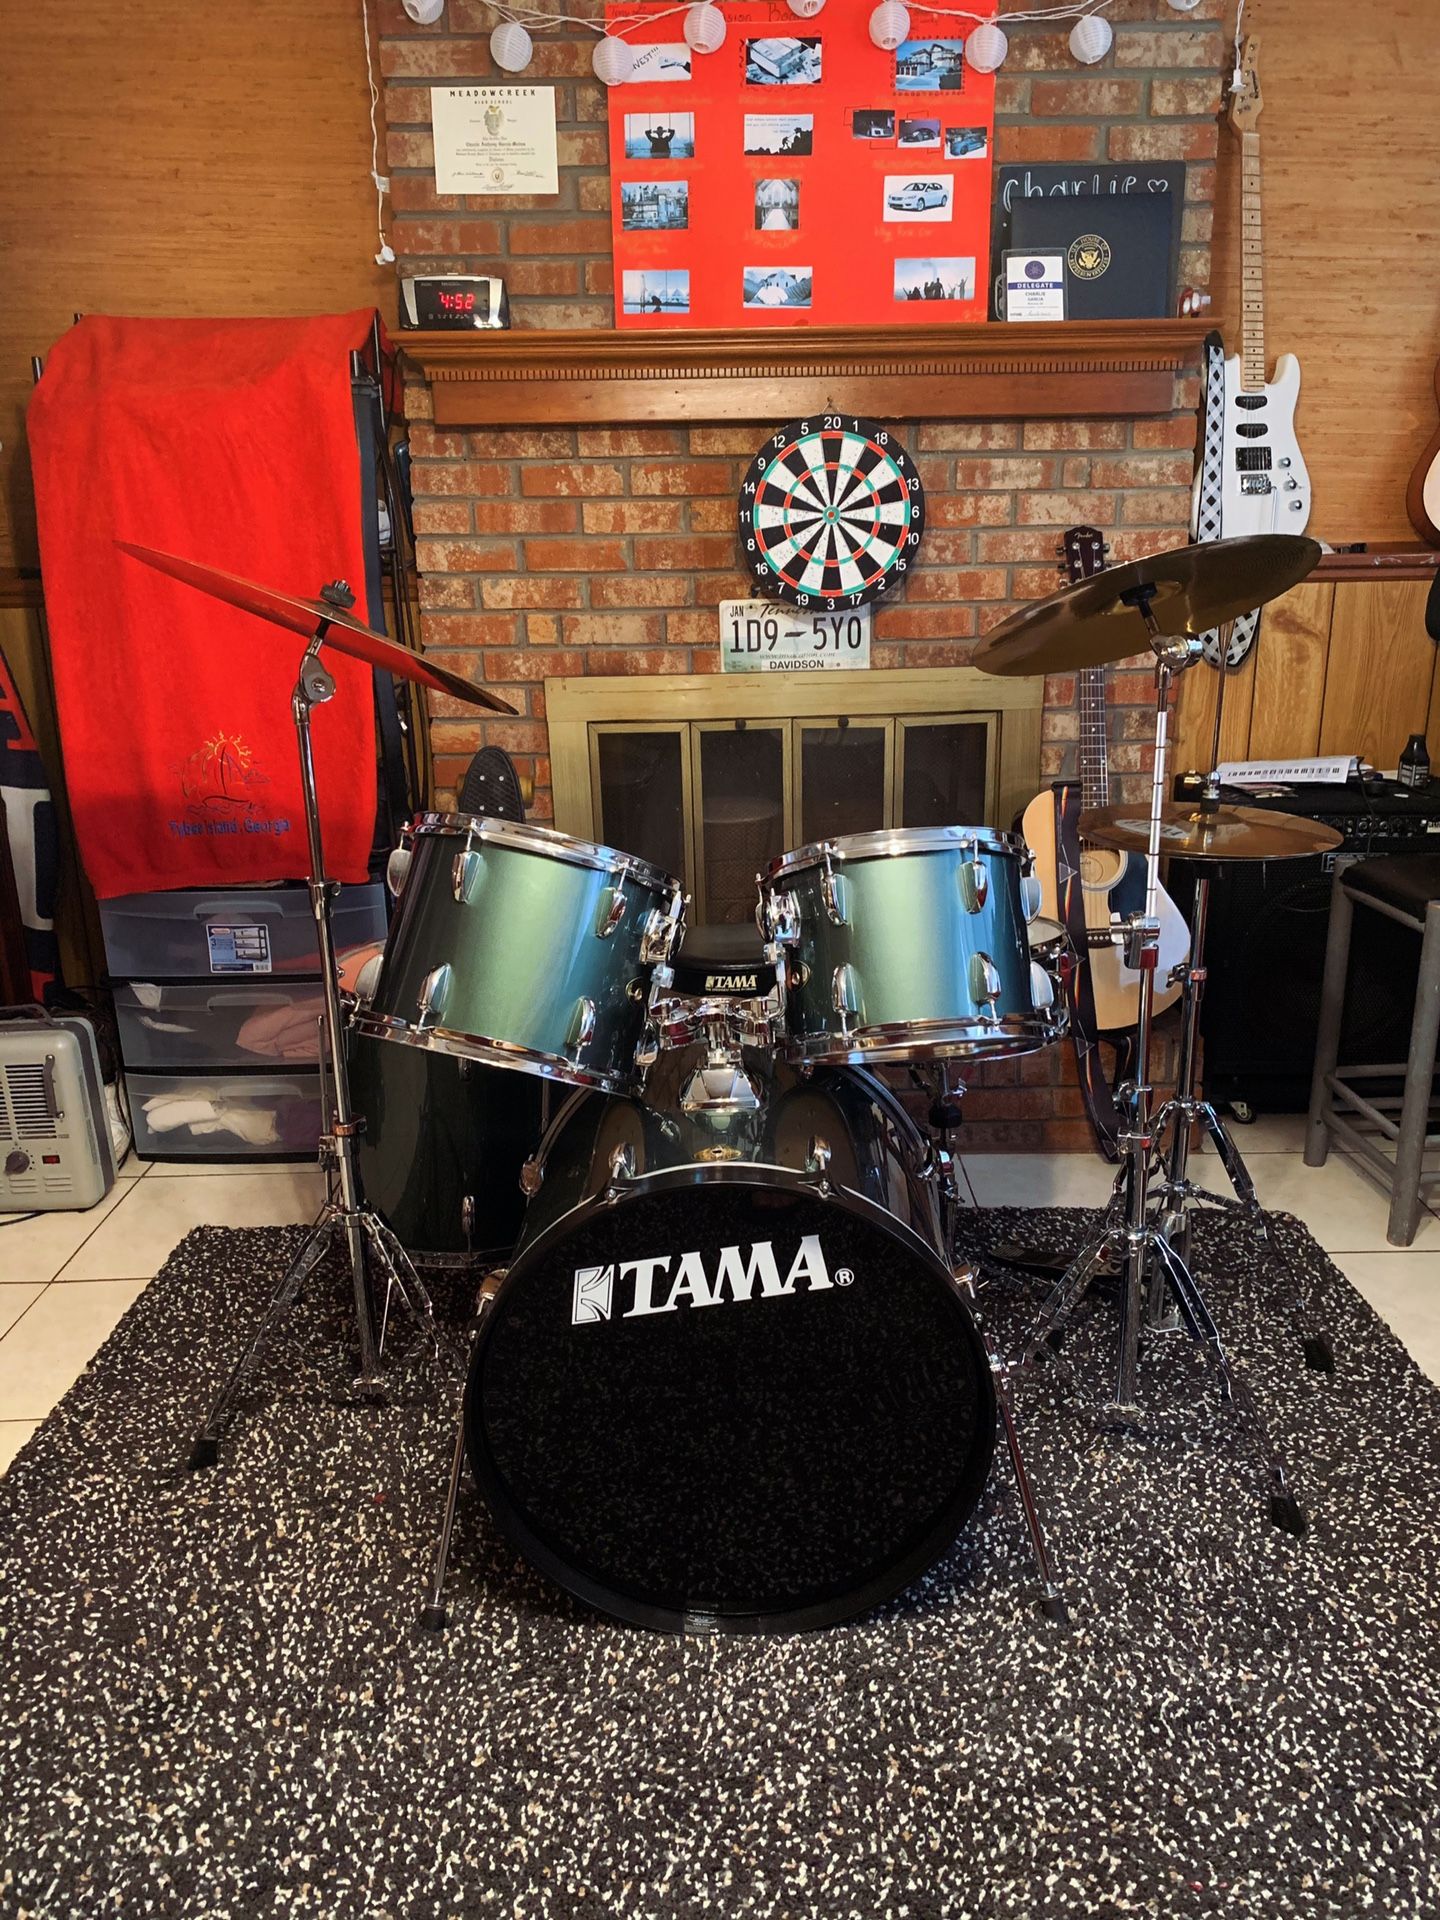 Full Tama drum set for sale!!!